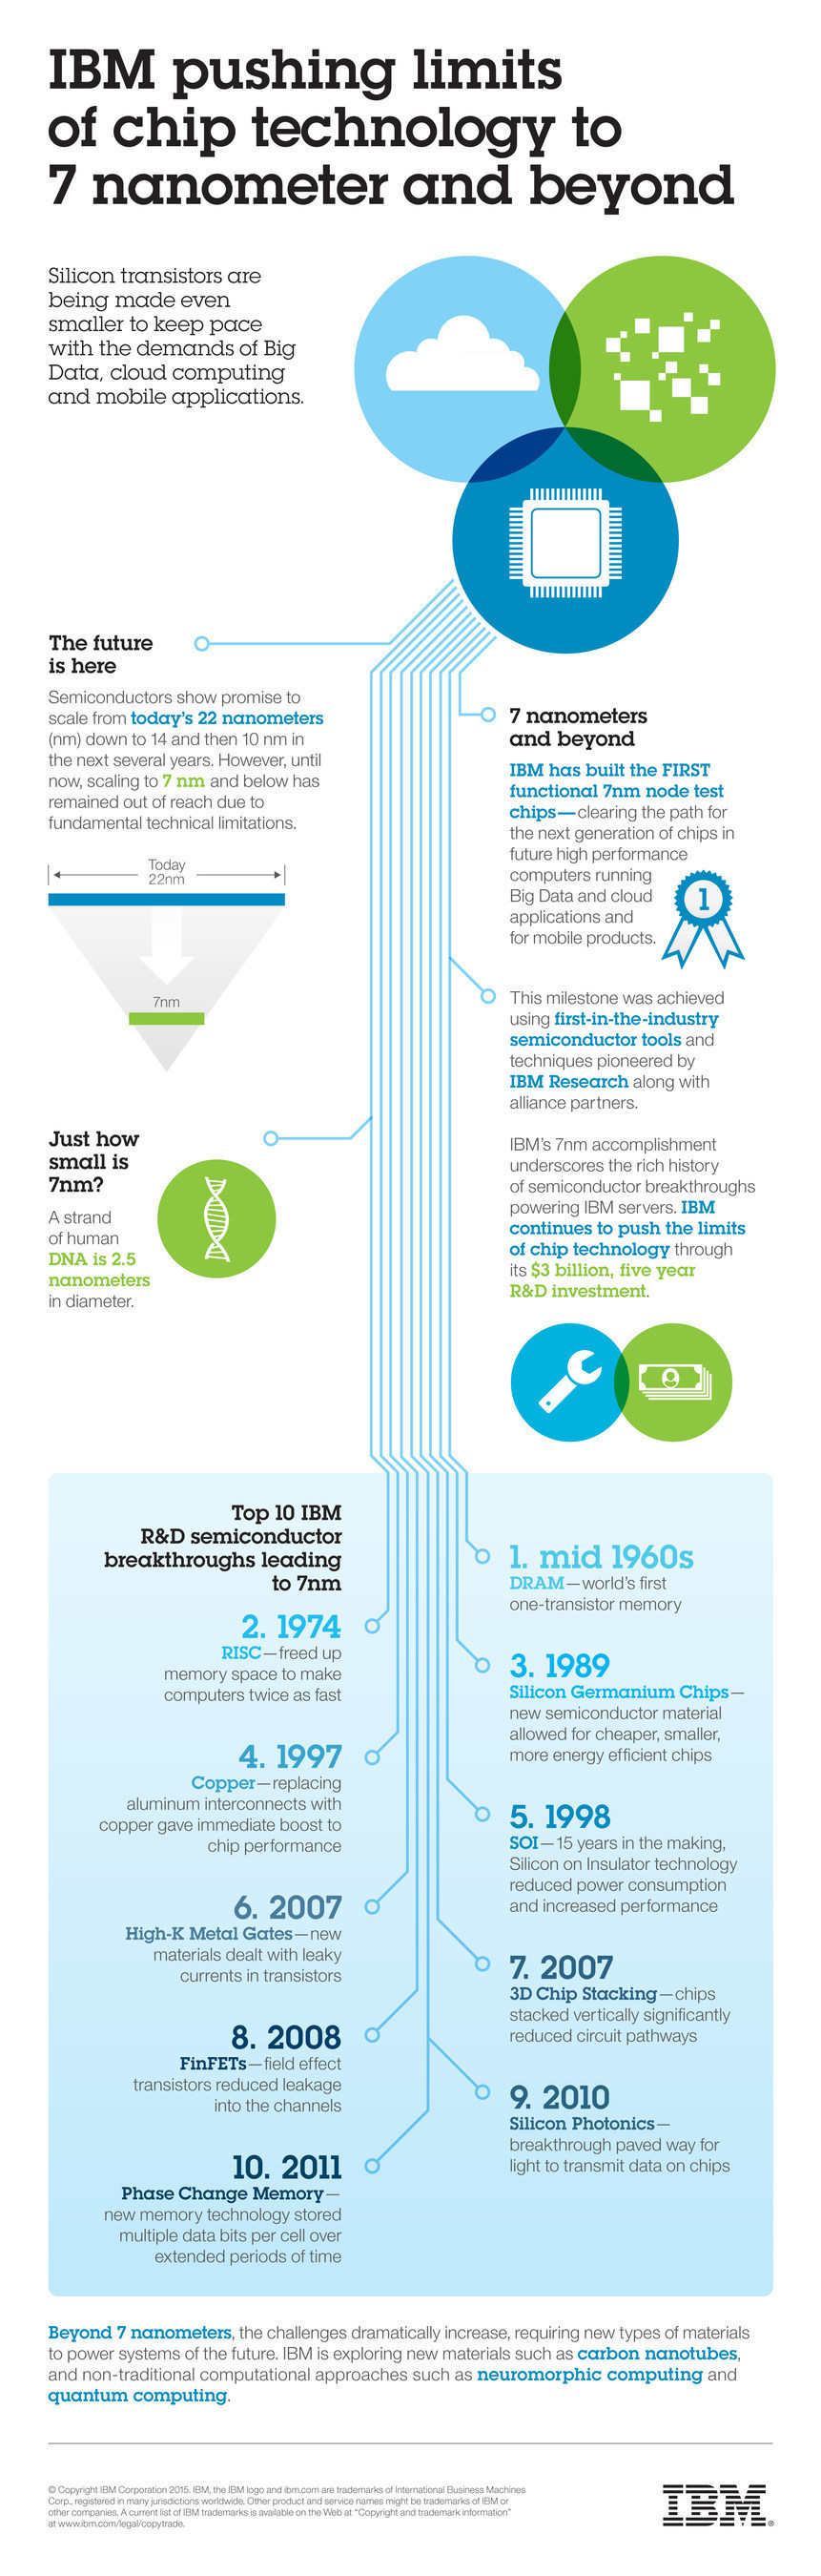 Infographic - IBM Pushing Limits of Chip Technology to 7 nanometer and Beyond (PRNewsFoto/IBM)